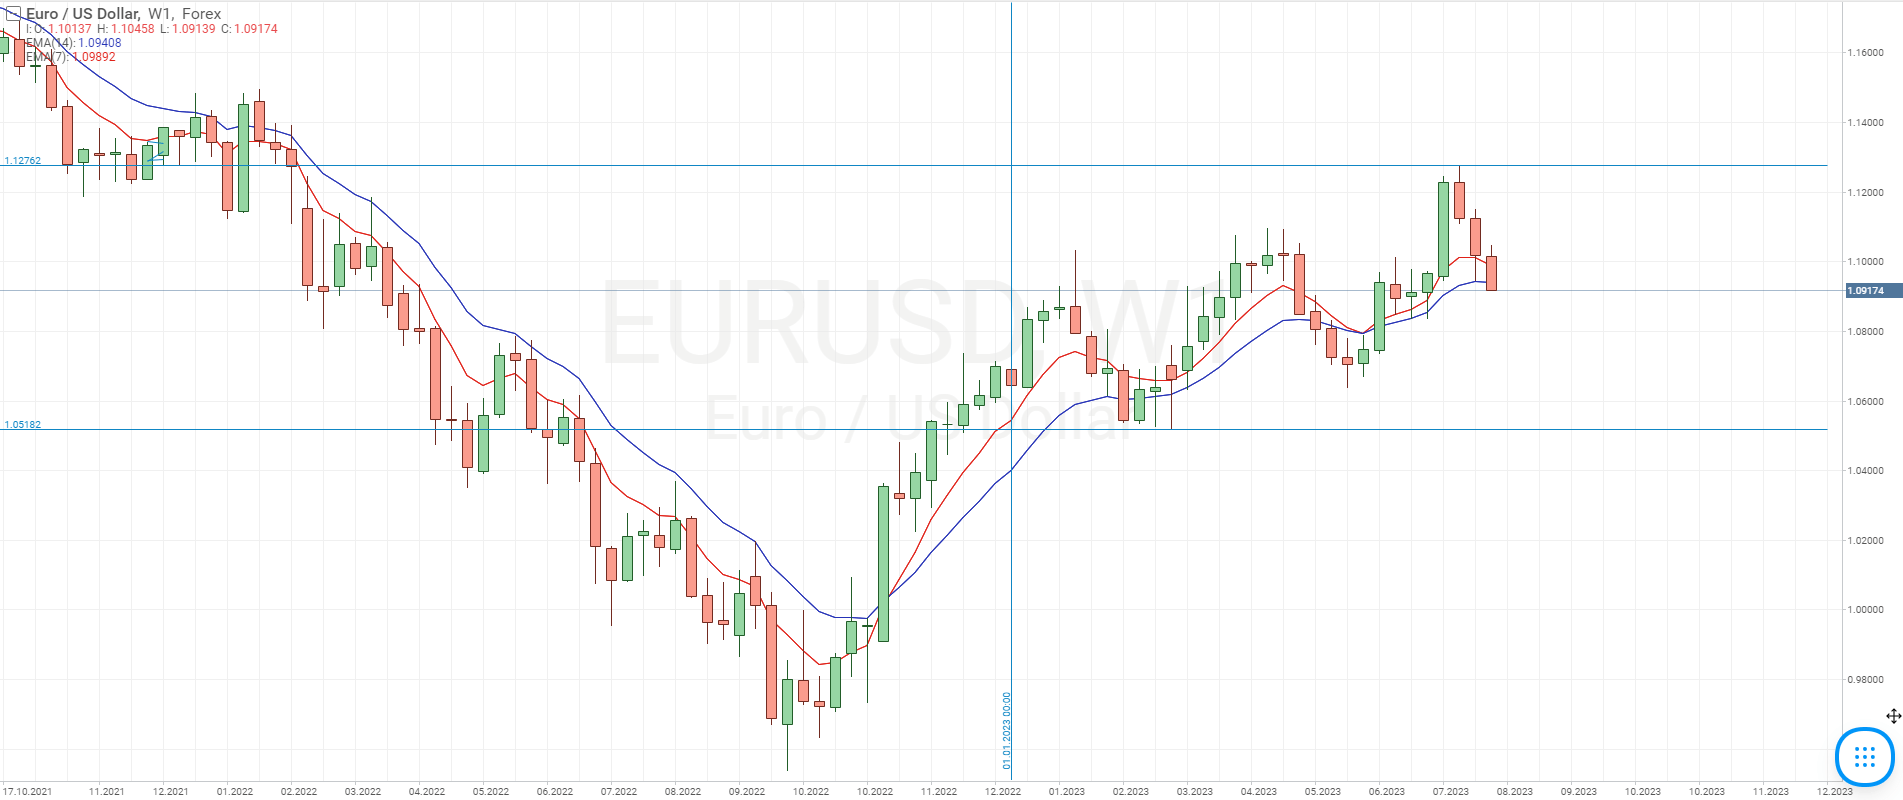 Gráfica del par de divisas EUR/USD